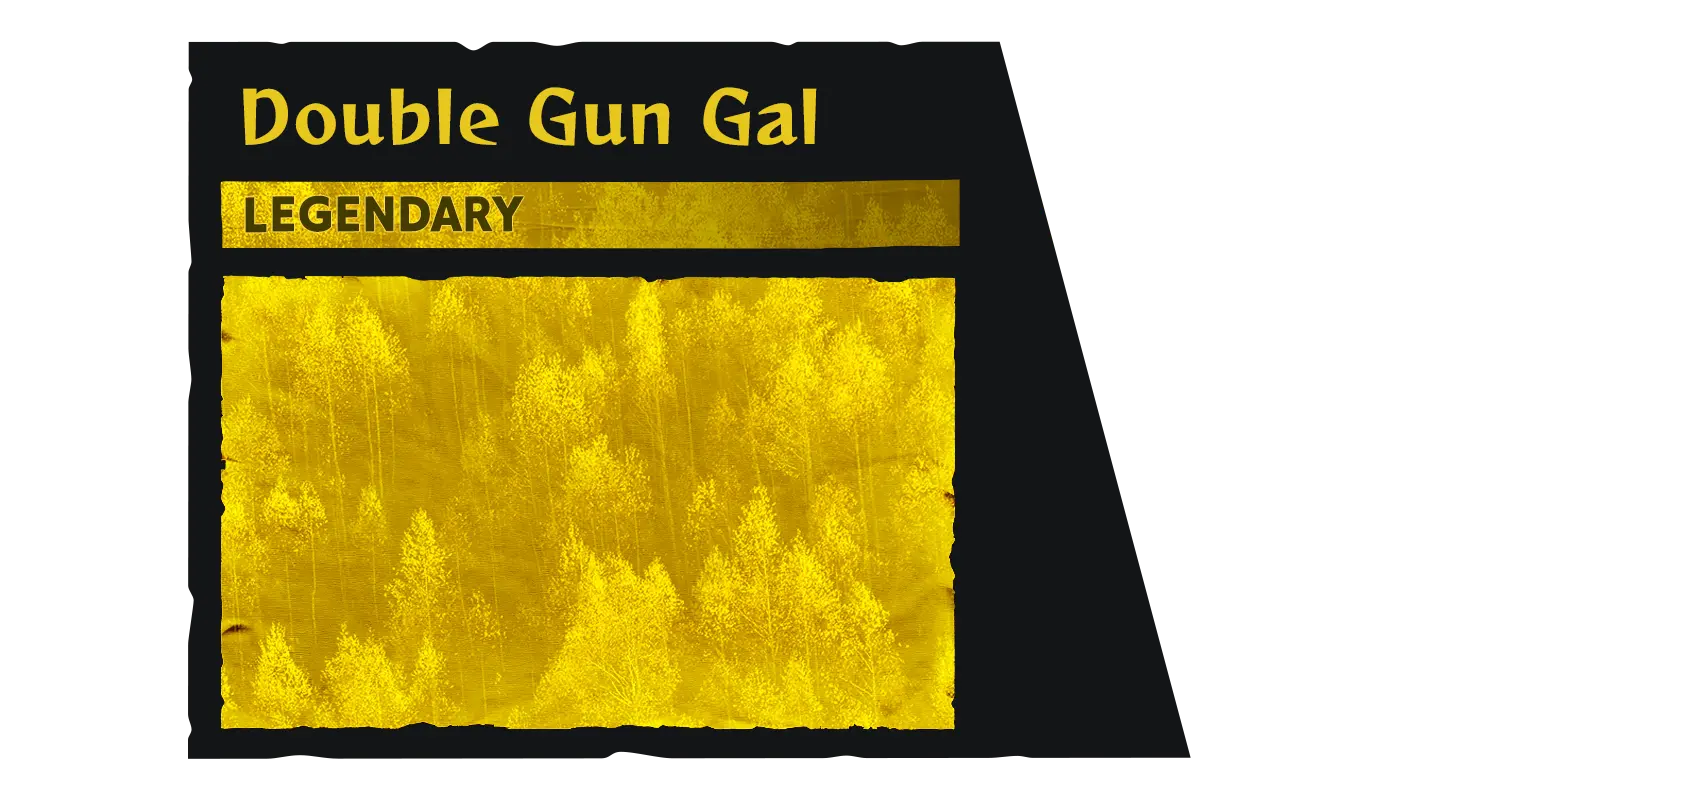 Double Gun Gal